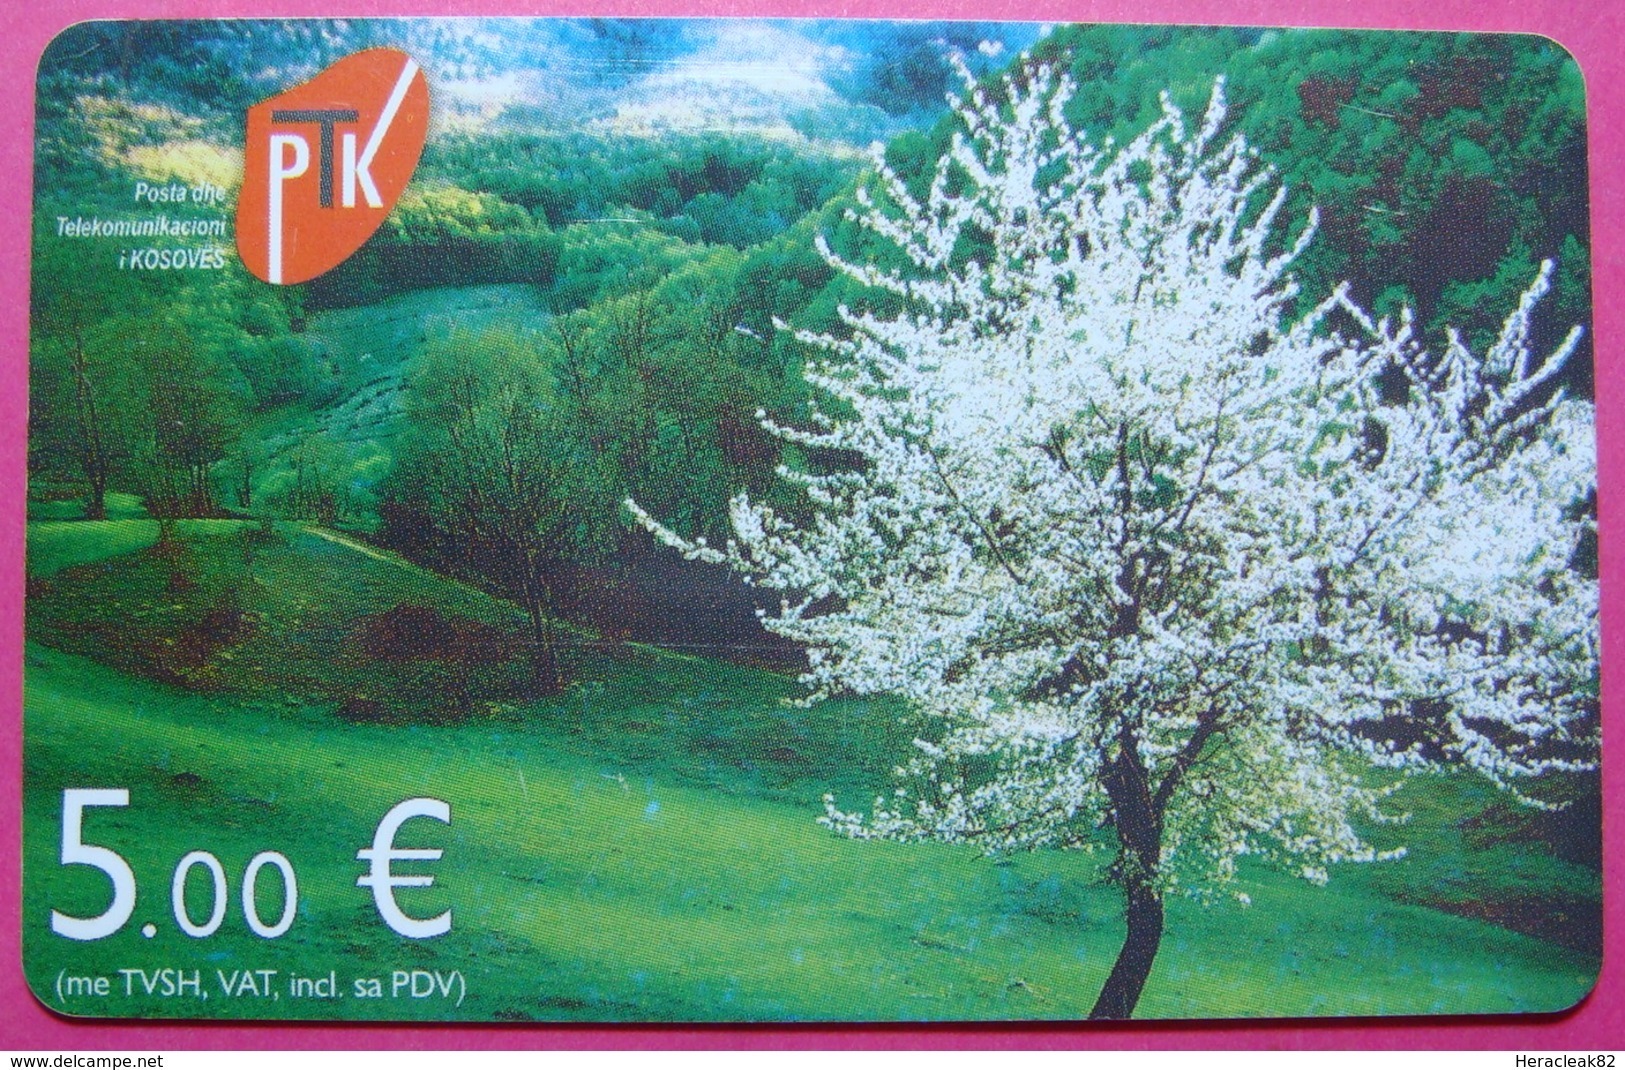 Kosovo CHIP PHONE CARD 5 EURO Operator VALA900. Serial # 54... *BREZOVICA Mountain* - Kosovo